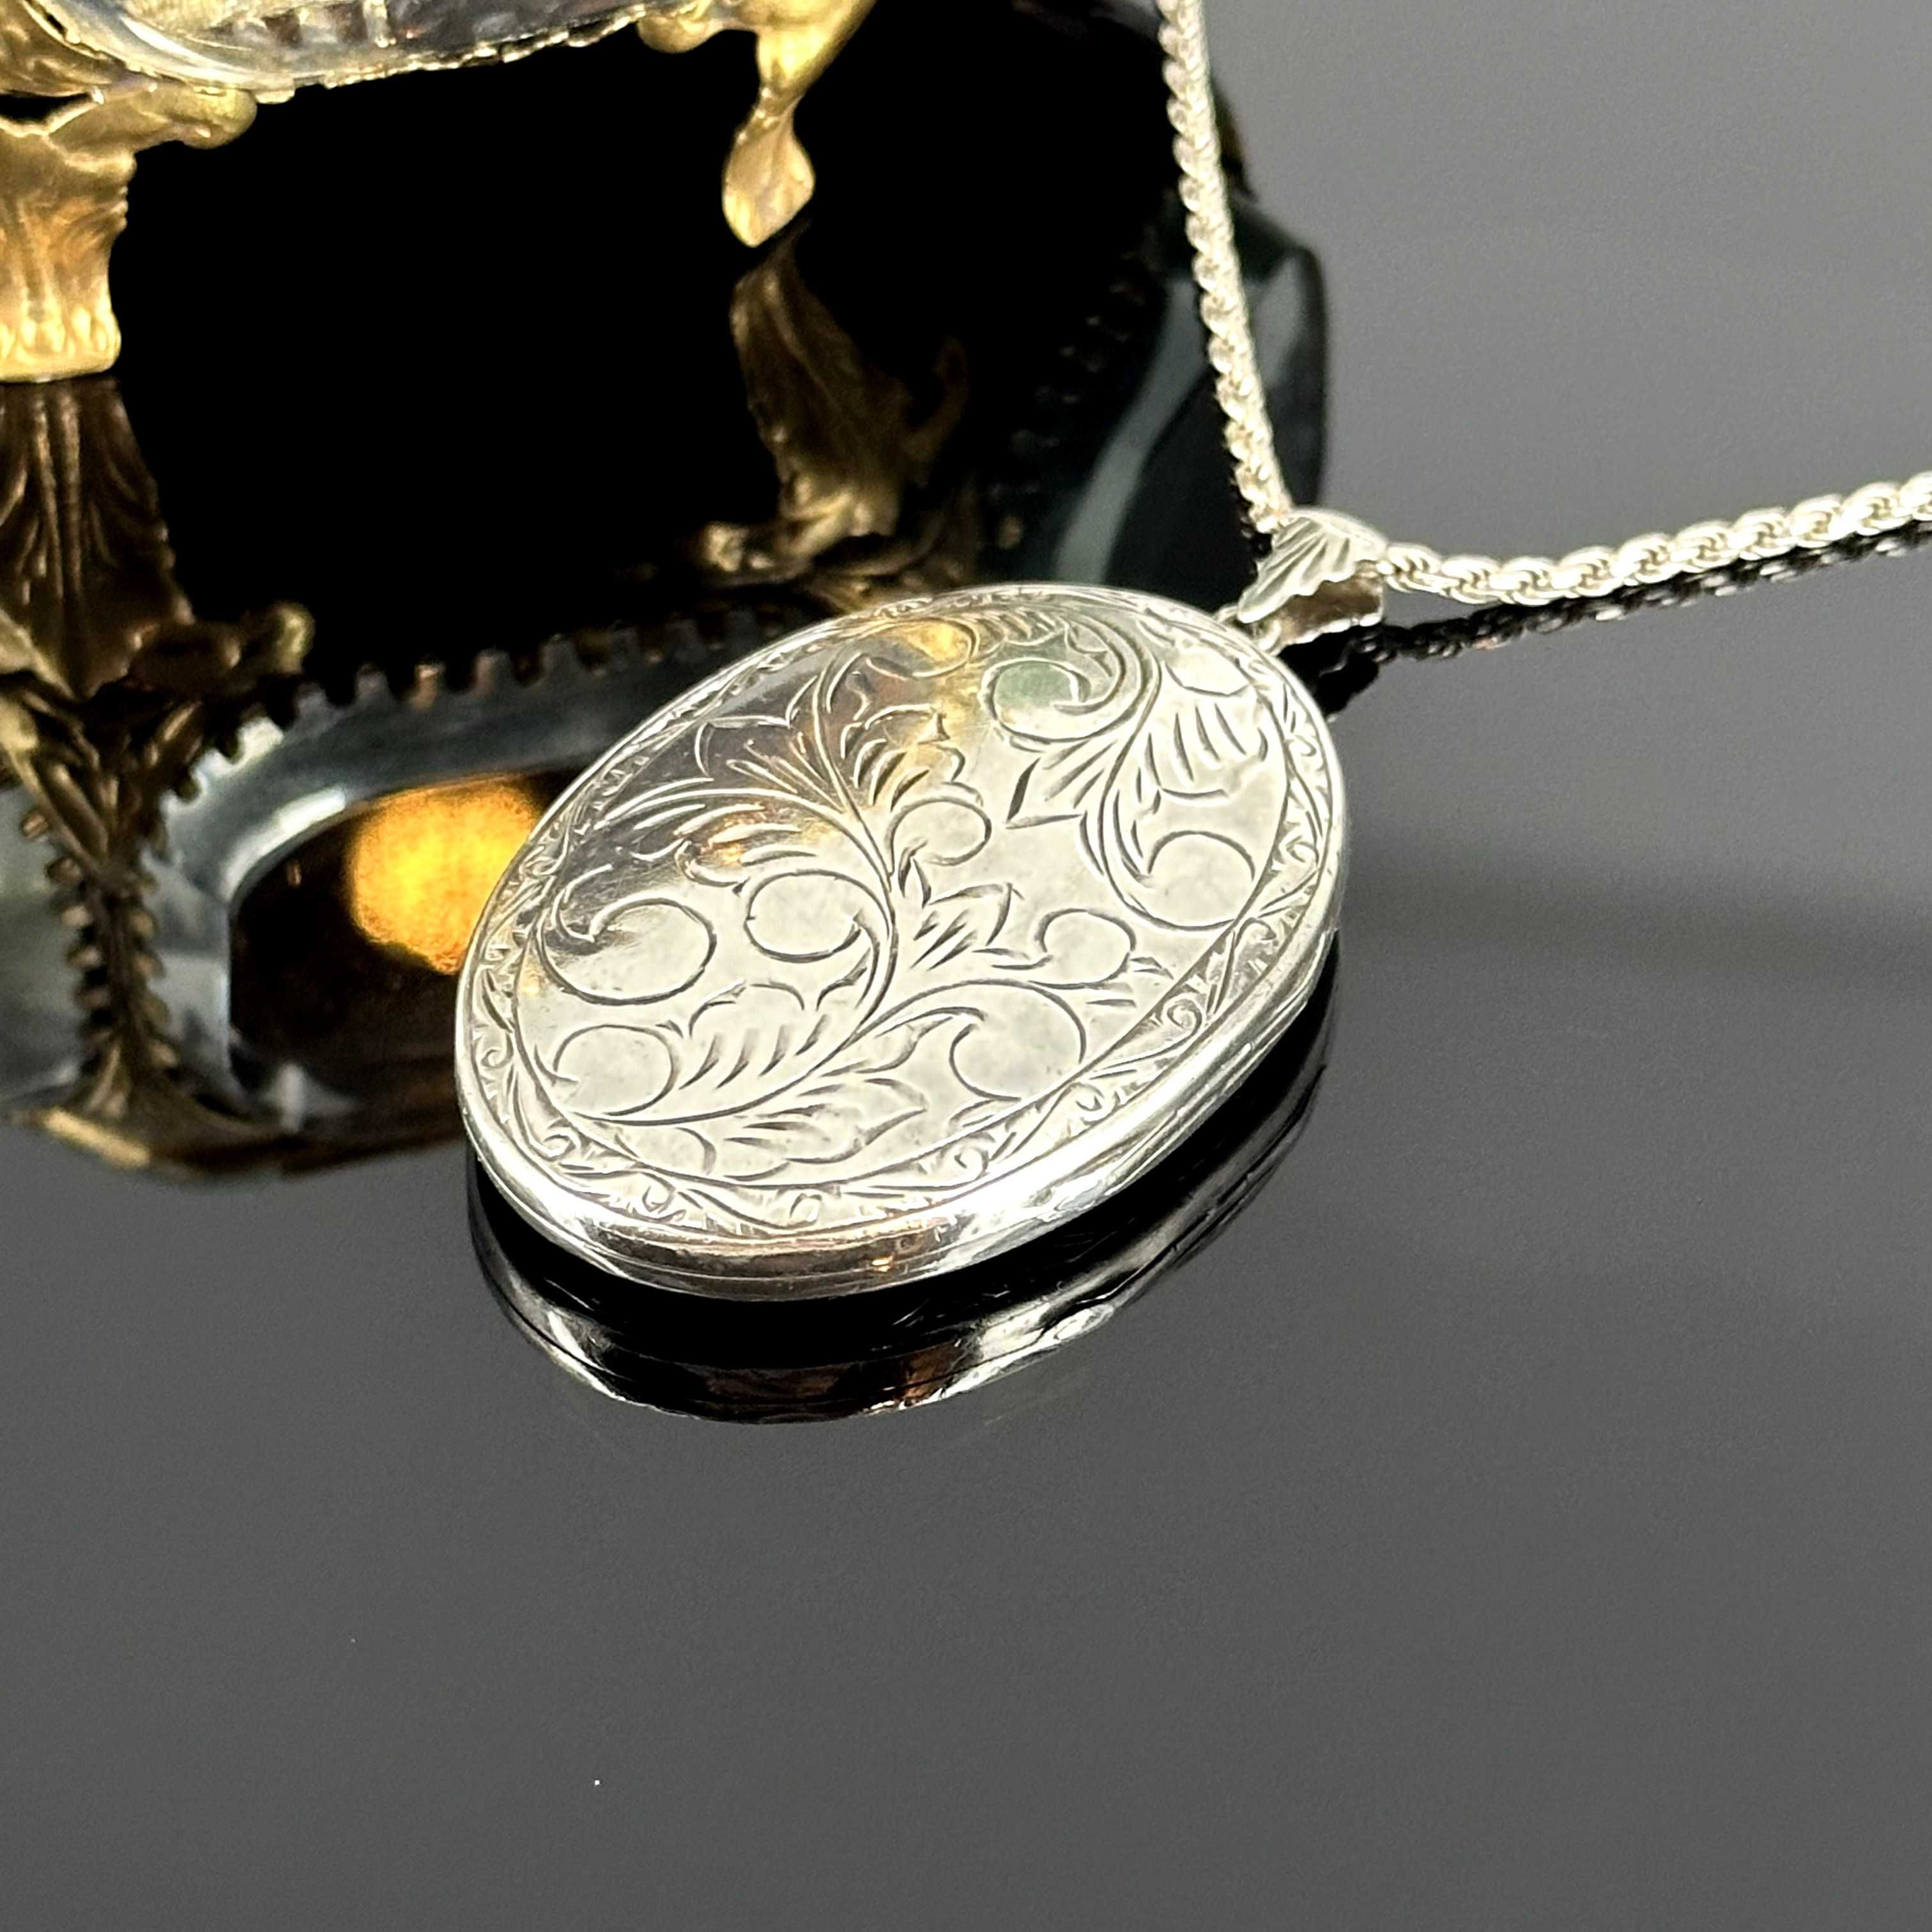 Srebro - Srebrny wielki szkaplerzyk - próba srebra 925